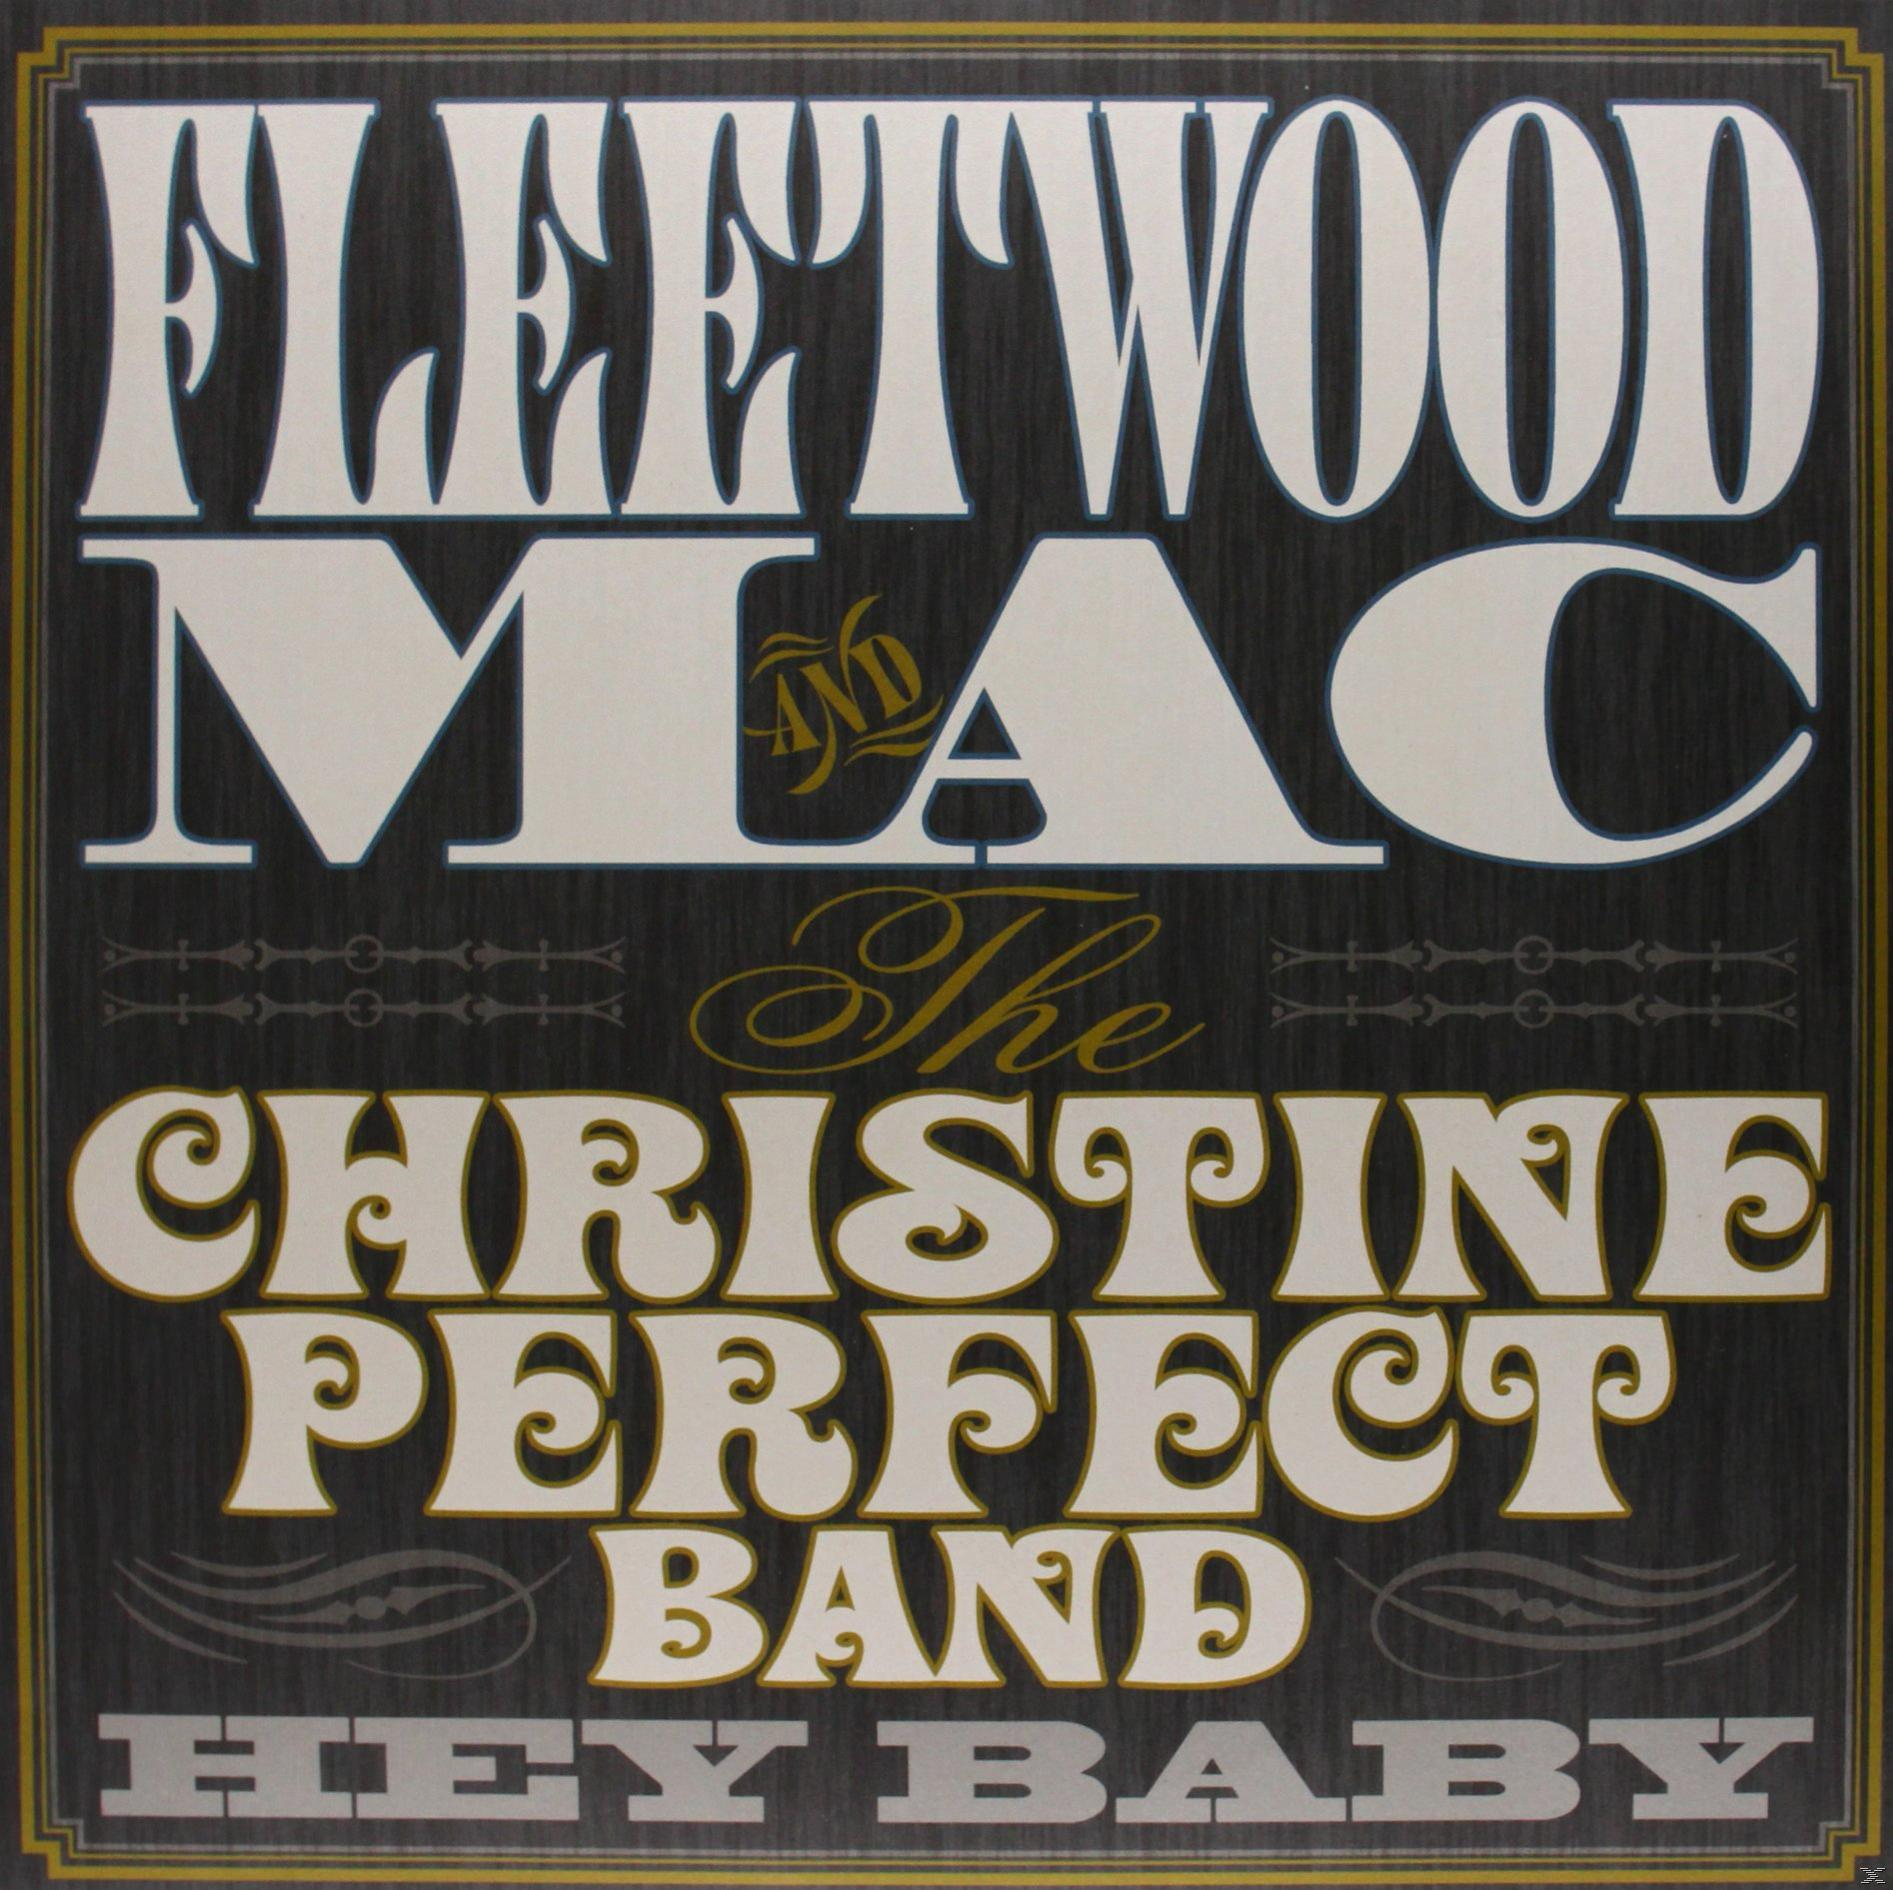 Fleetwood Mac, Christine Hey - Band (Vinyl) - Baby Perfect